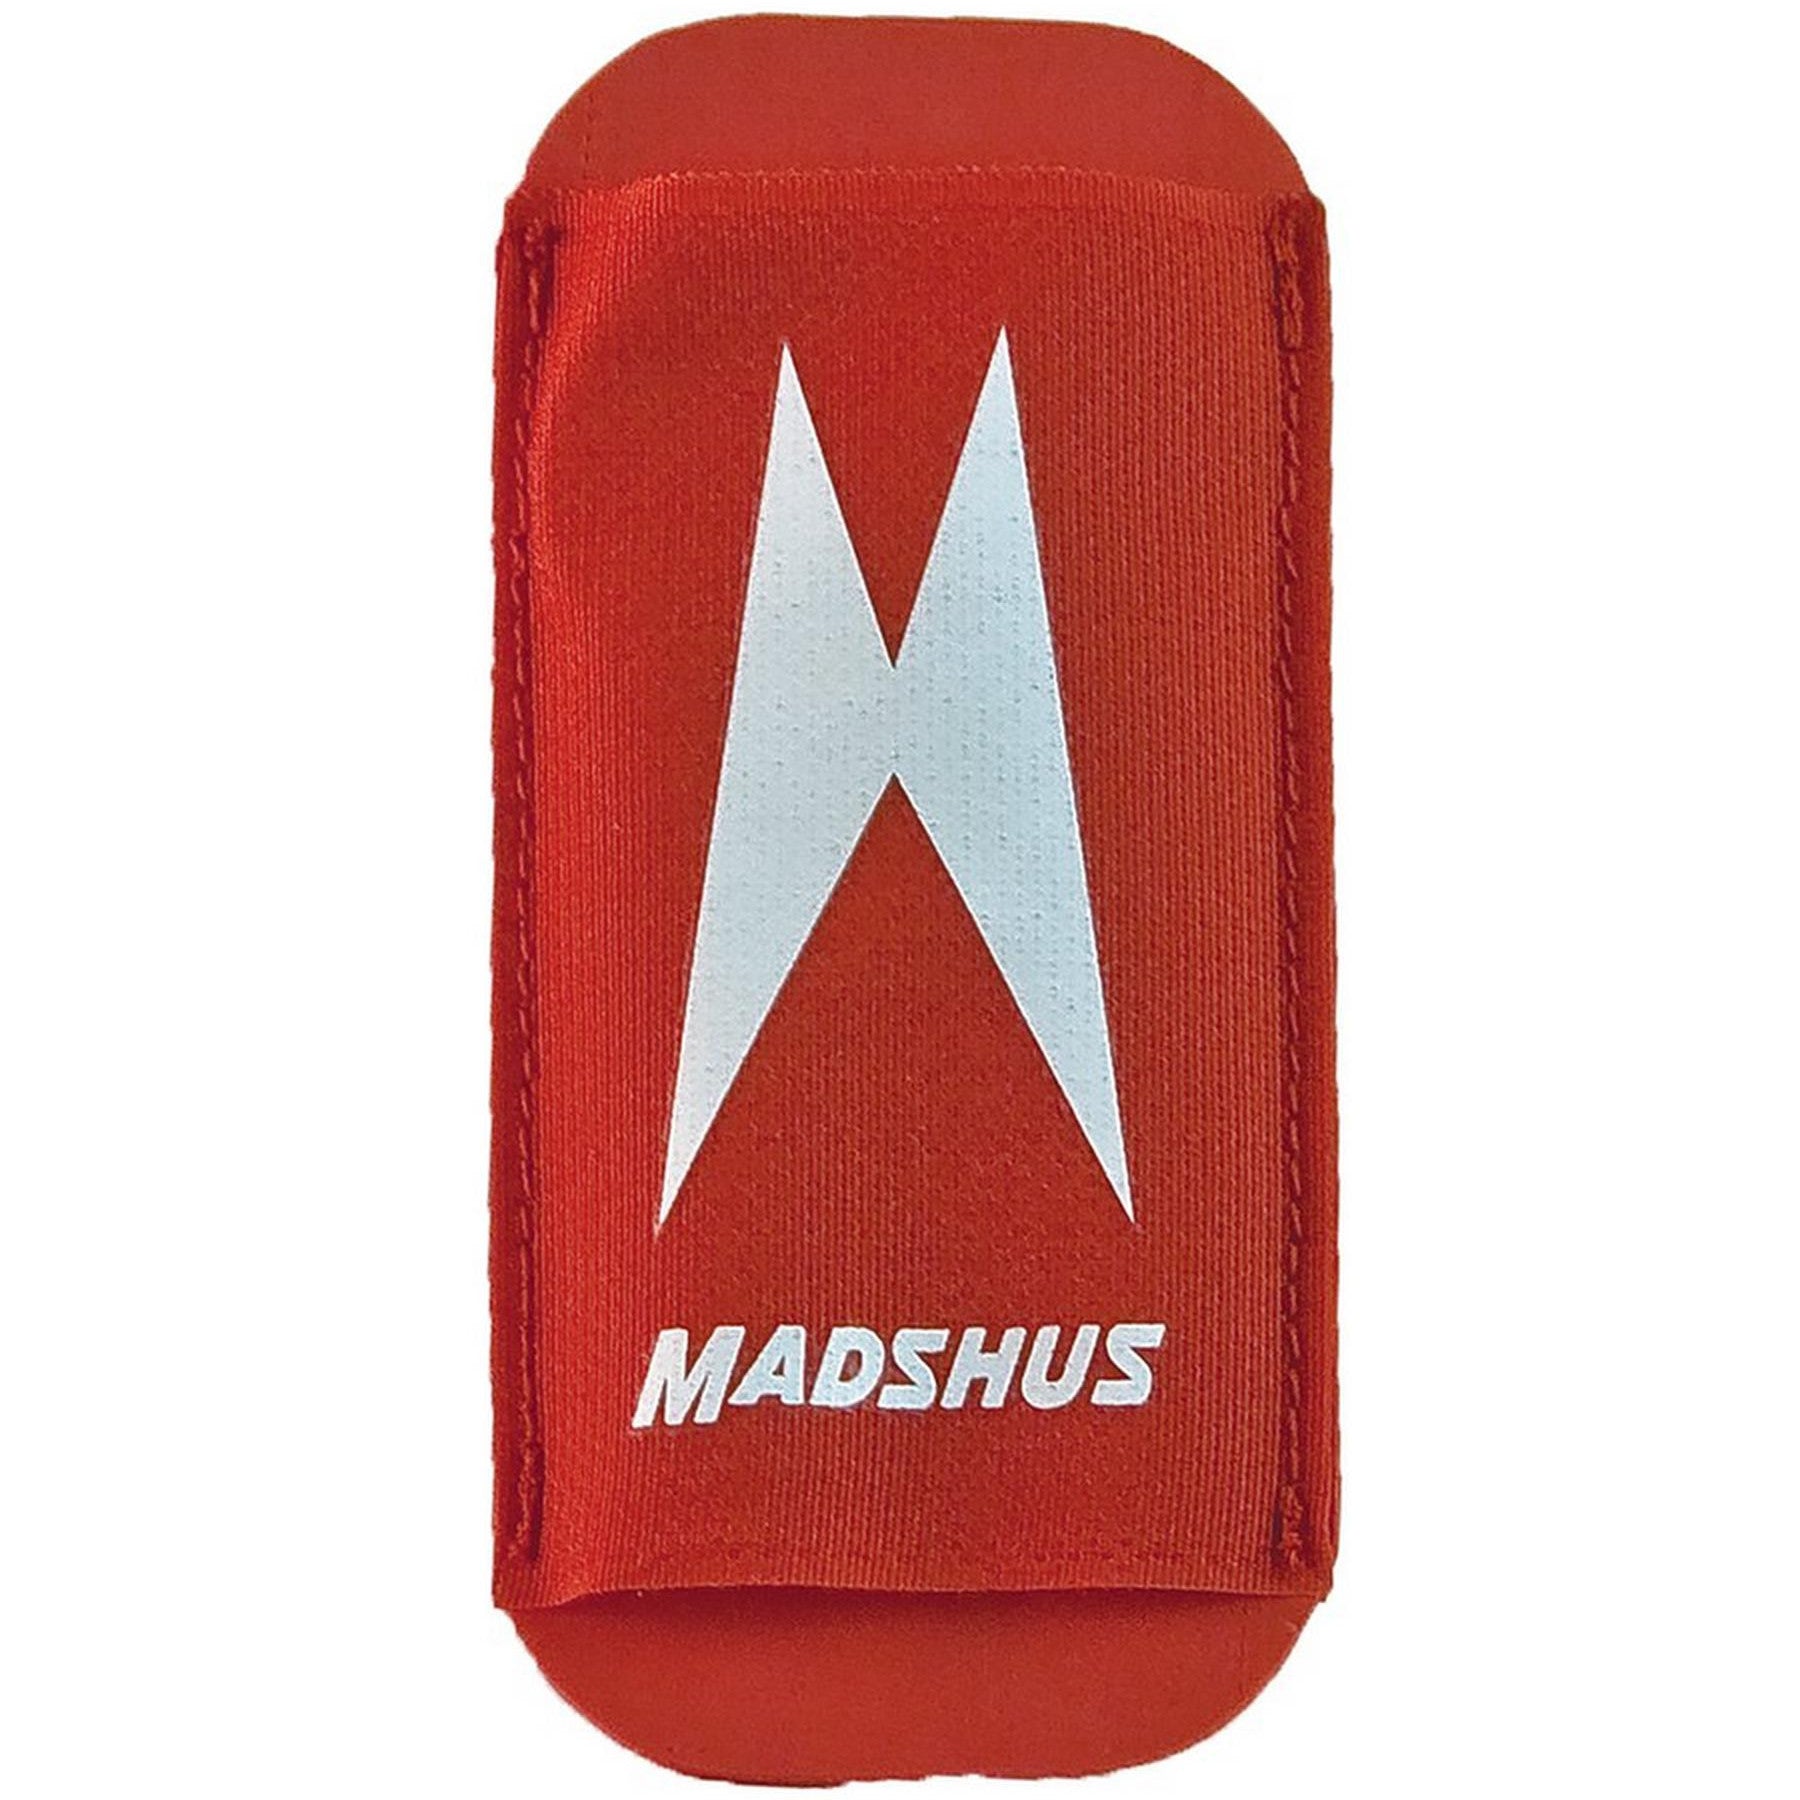 Madshus Ski Strap Racing